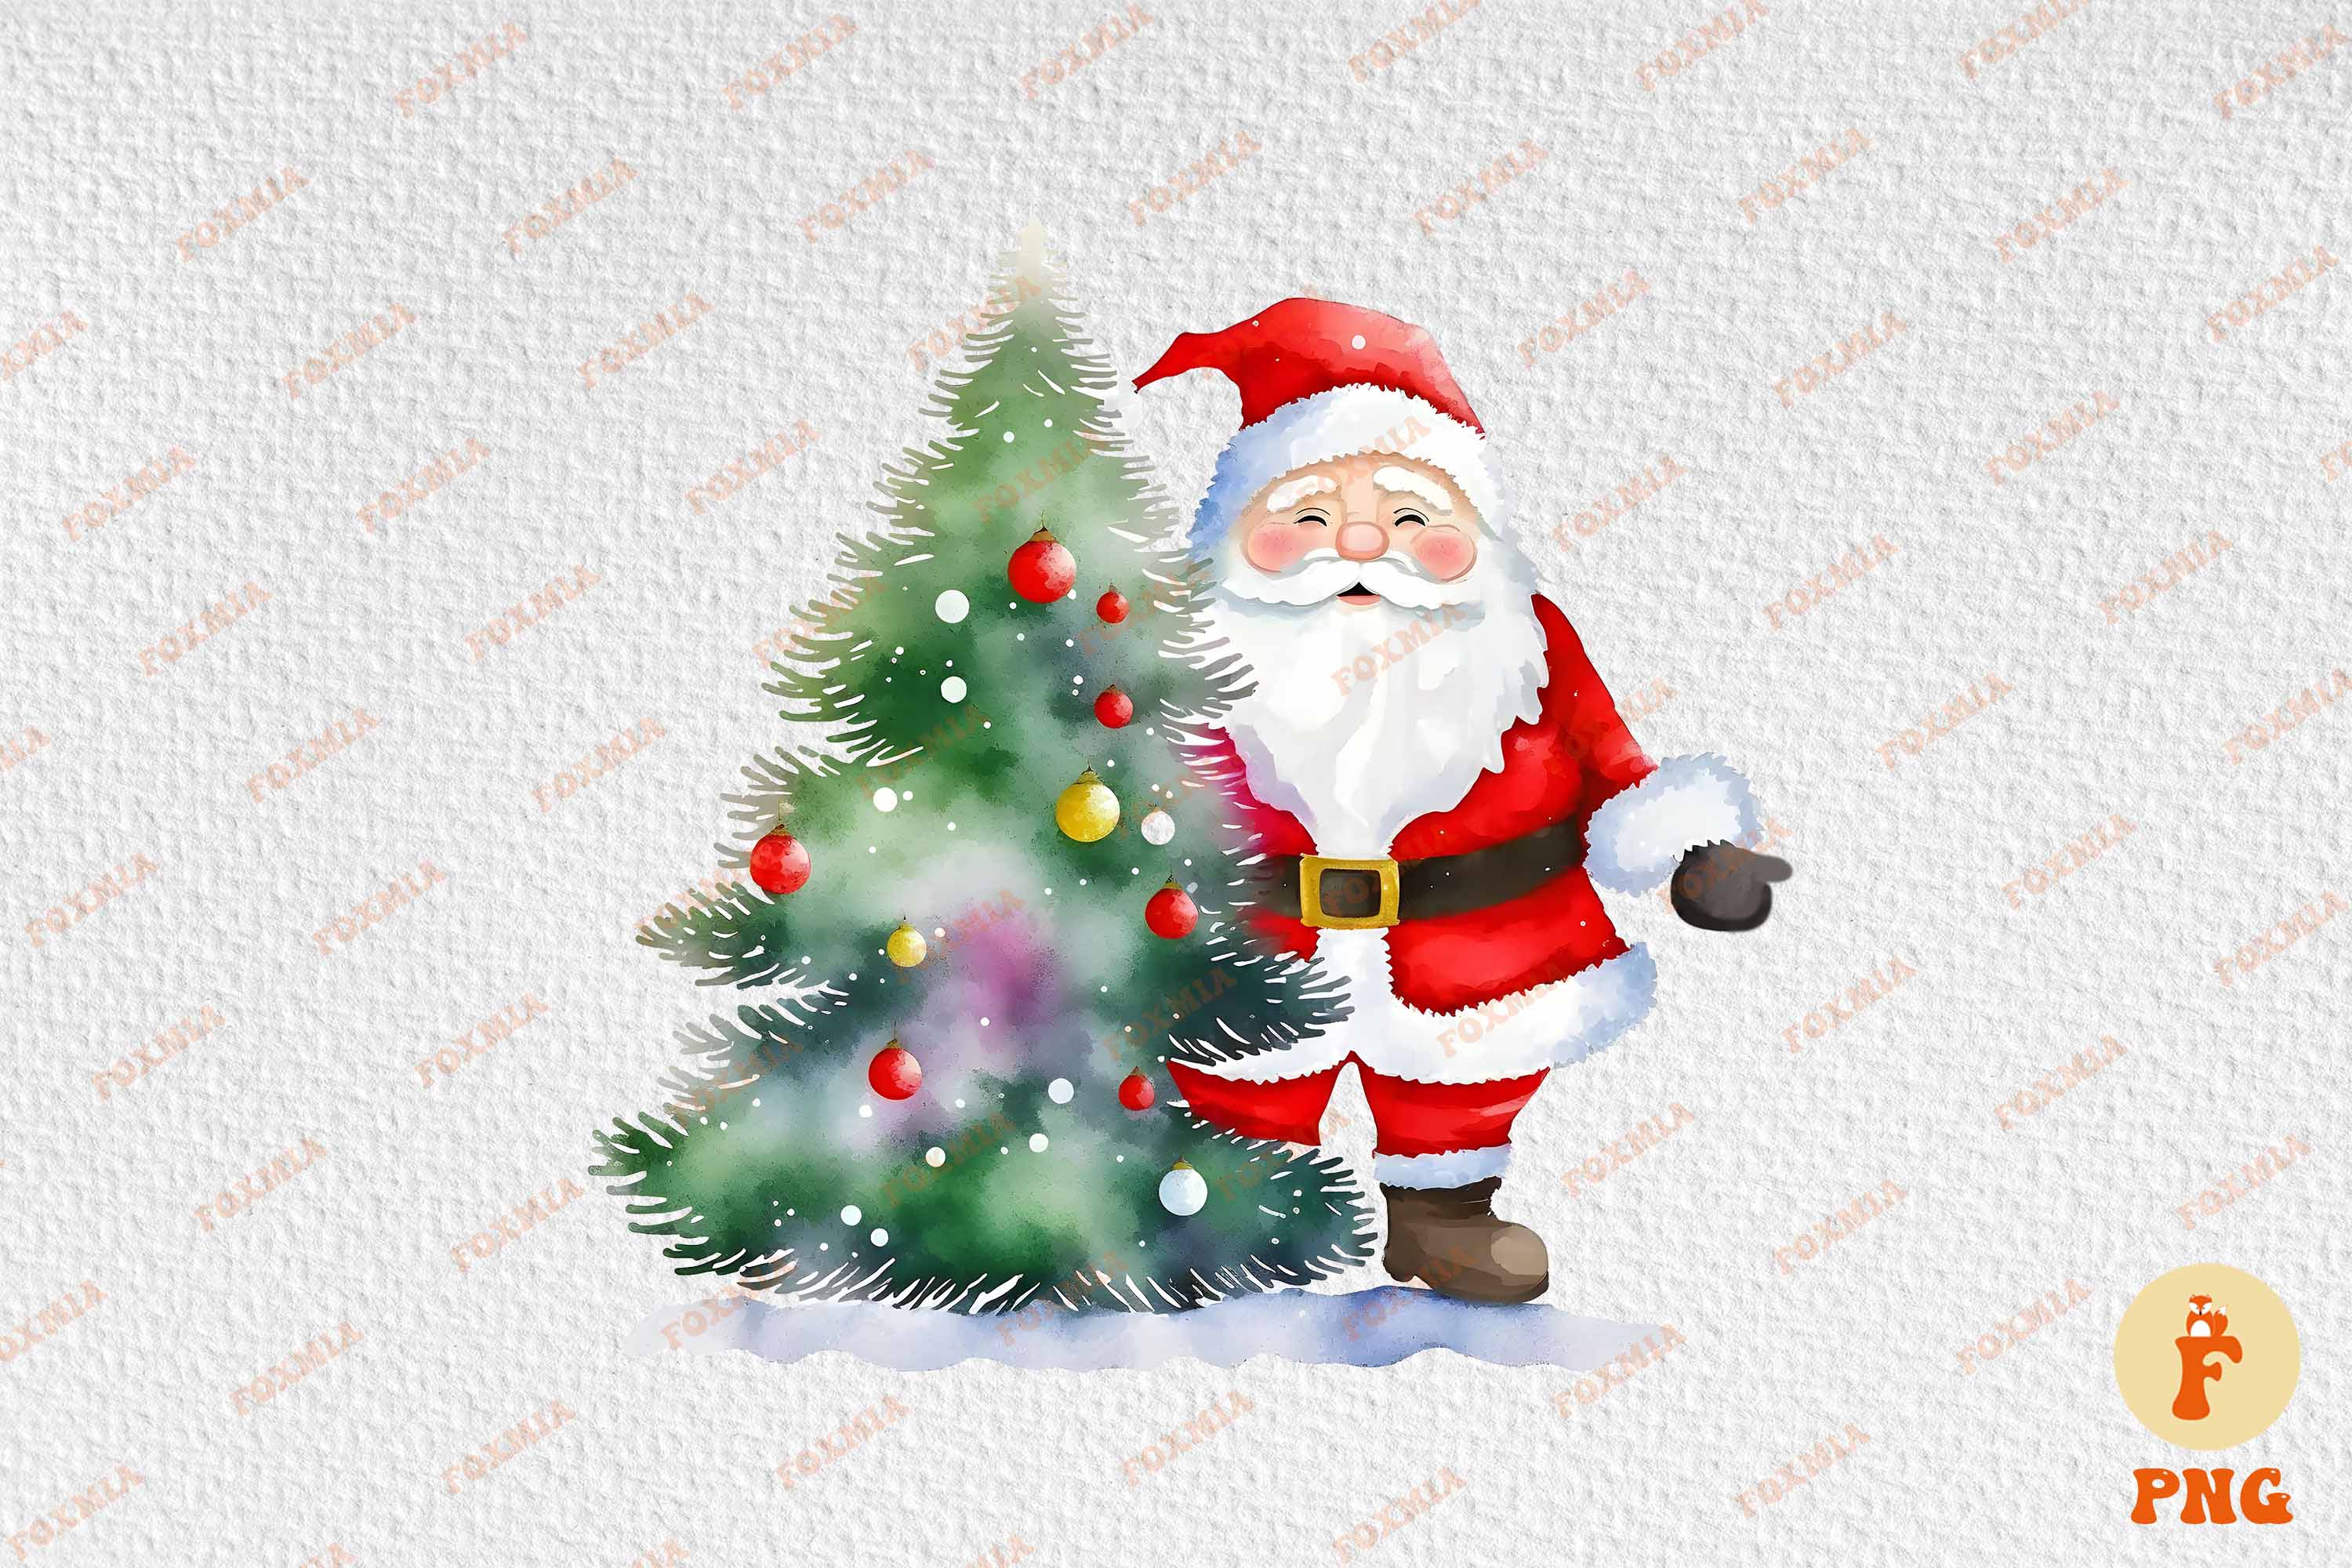 Gorgeous image of Santa with Christmas tree.